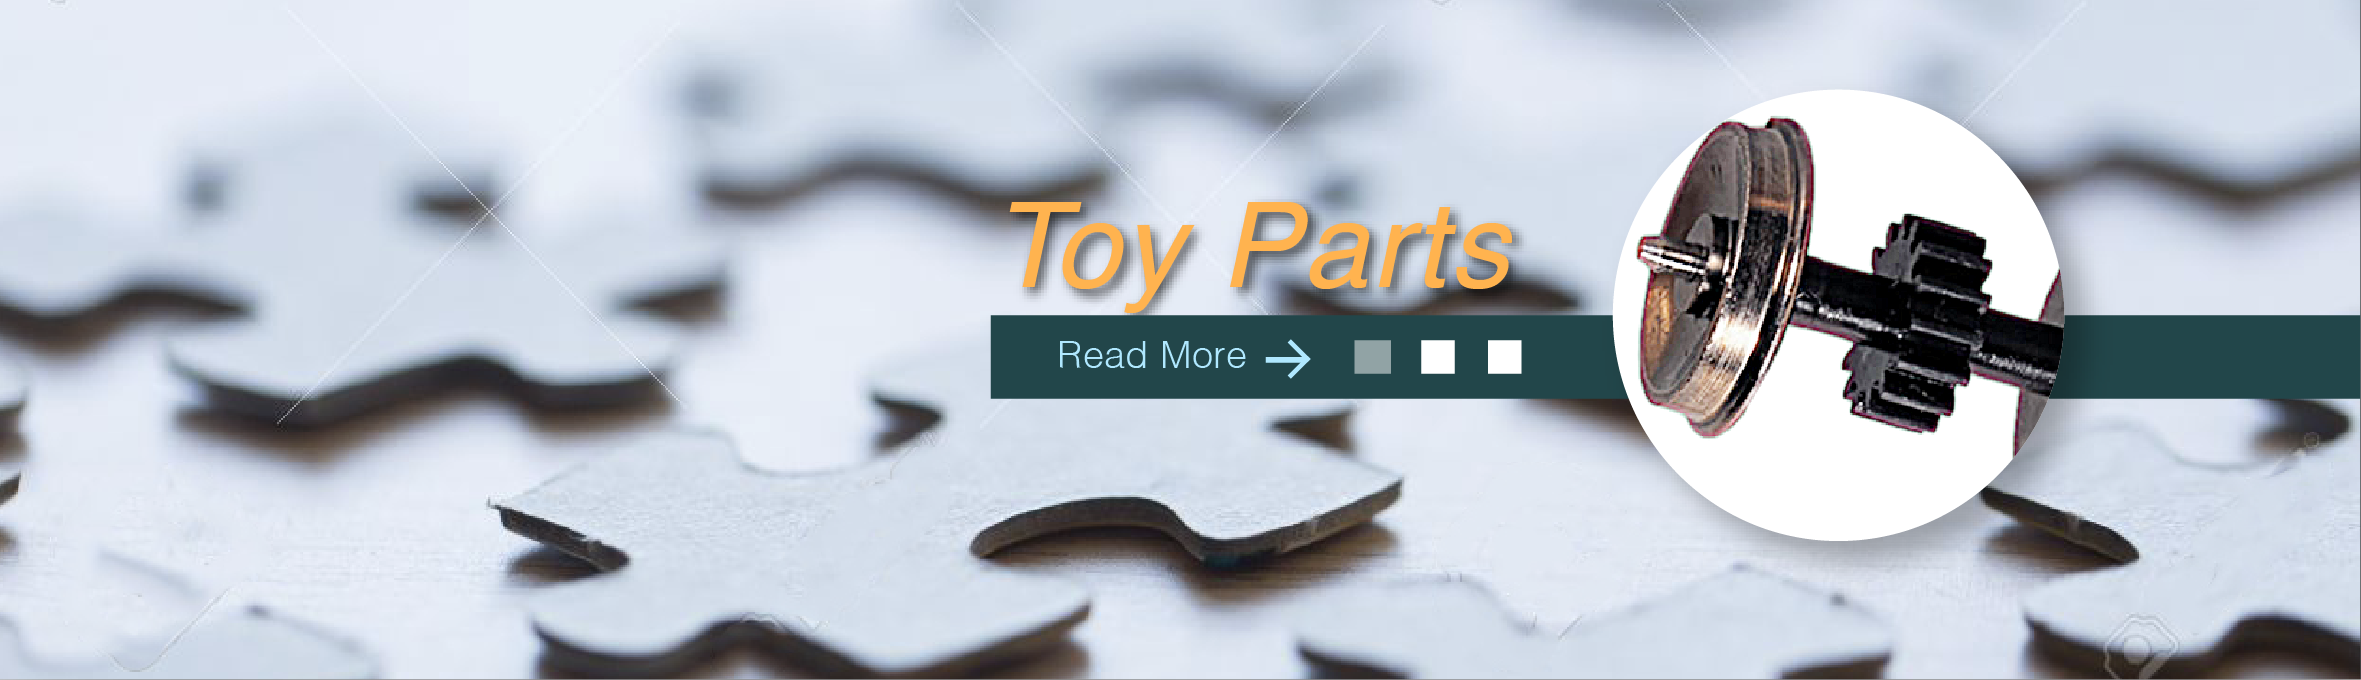 Toy parts